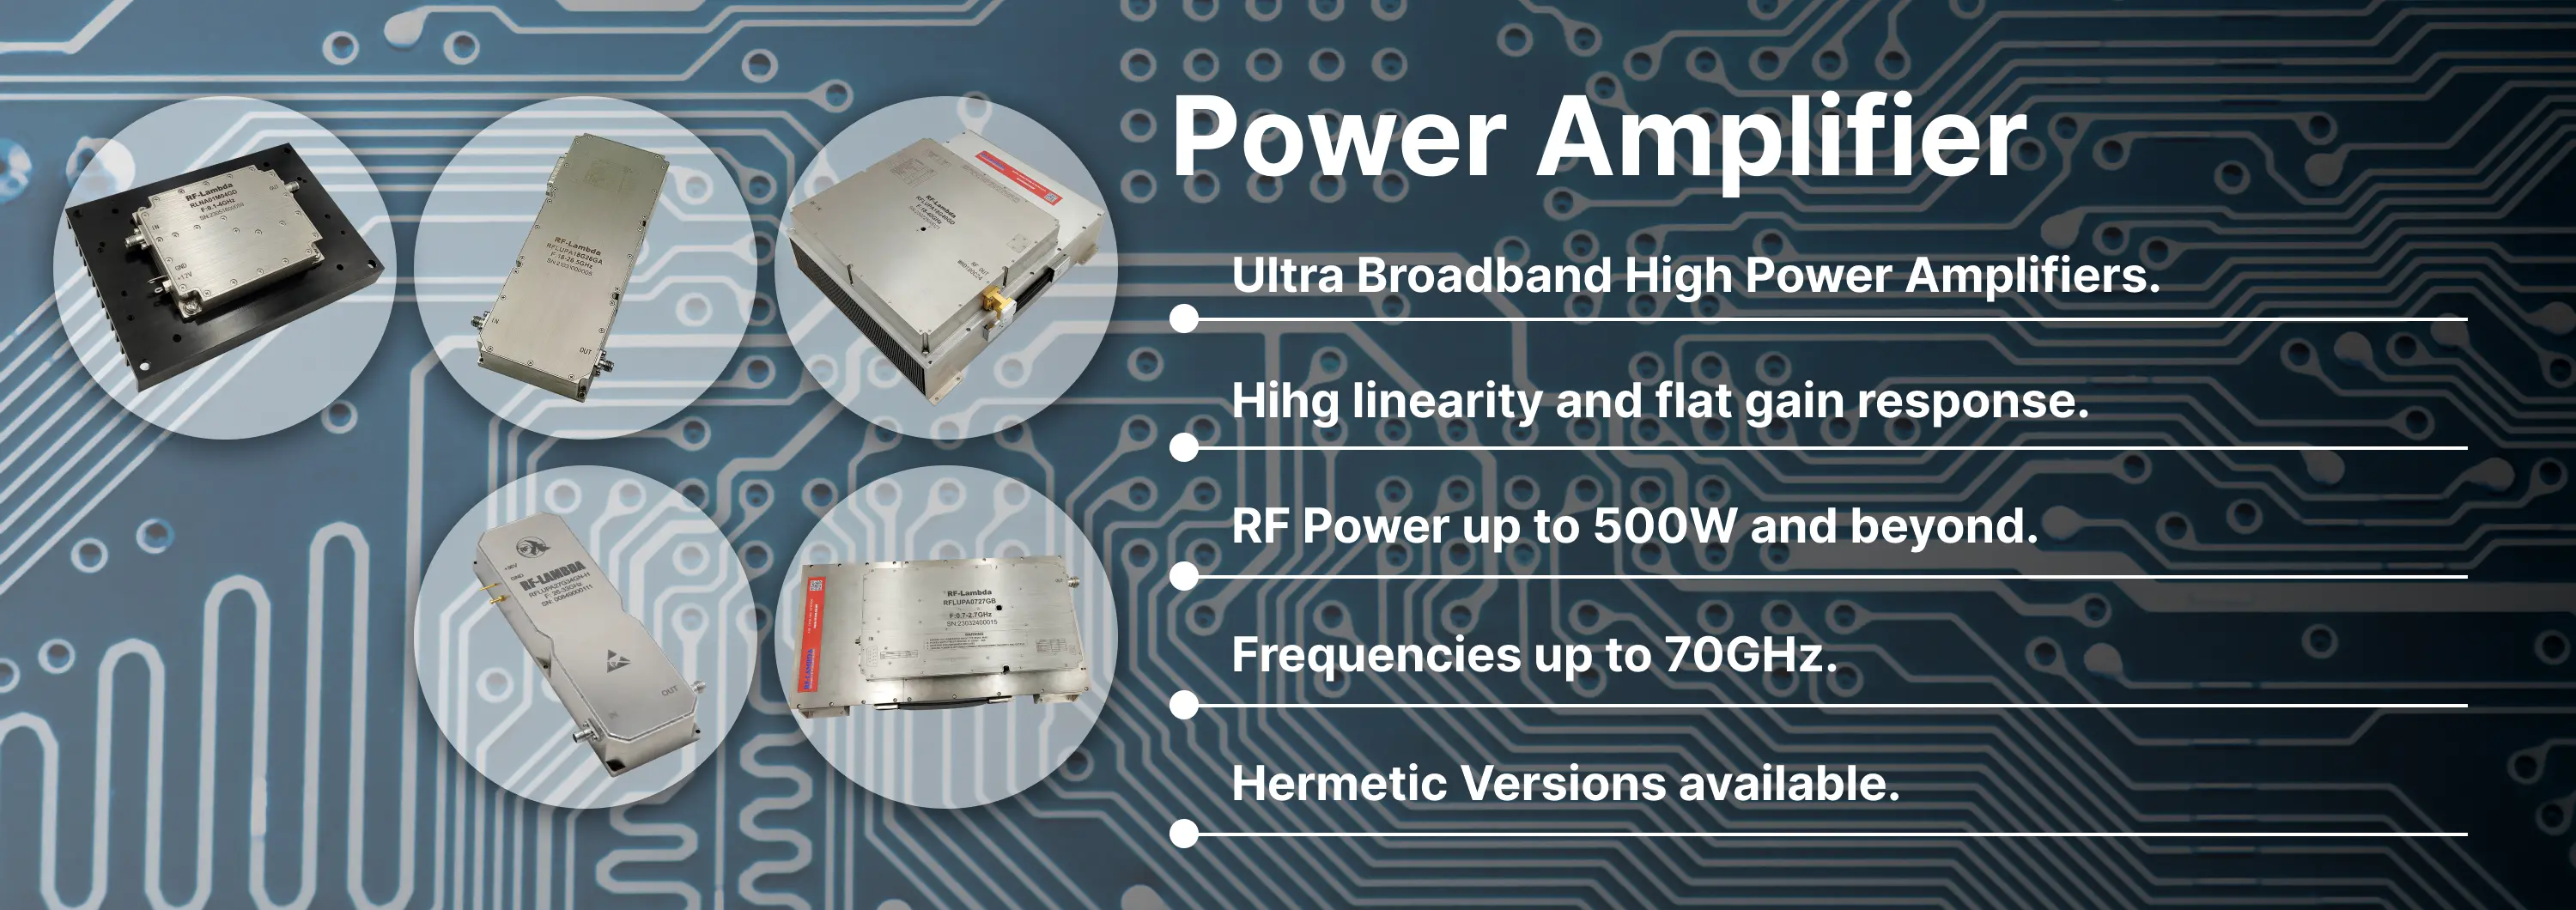 Power Amplifier (DC Powered) Banner